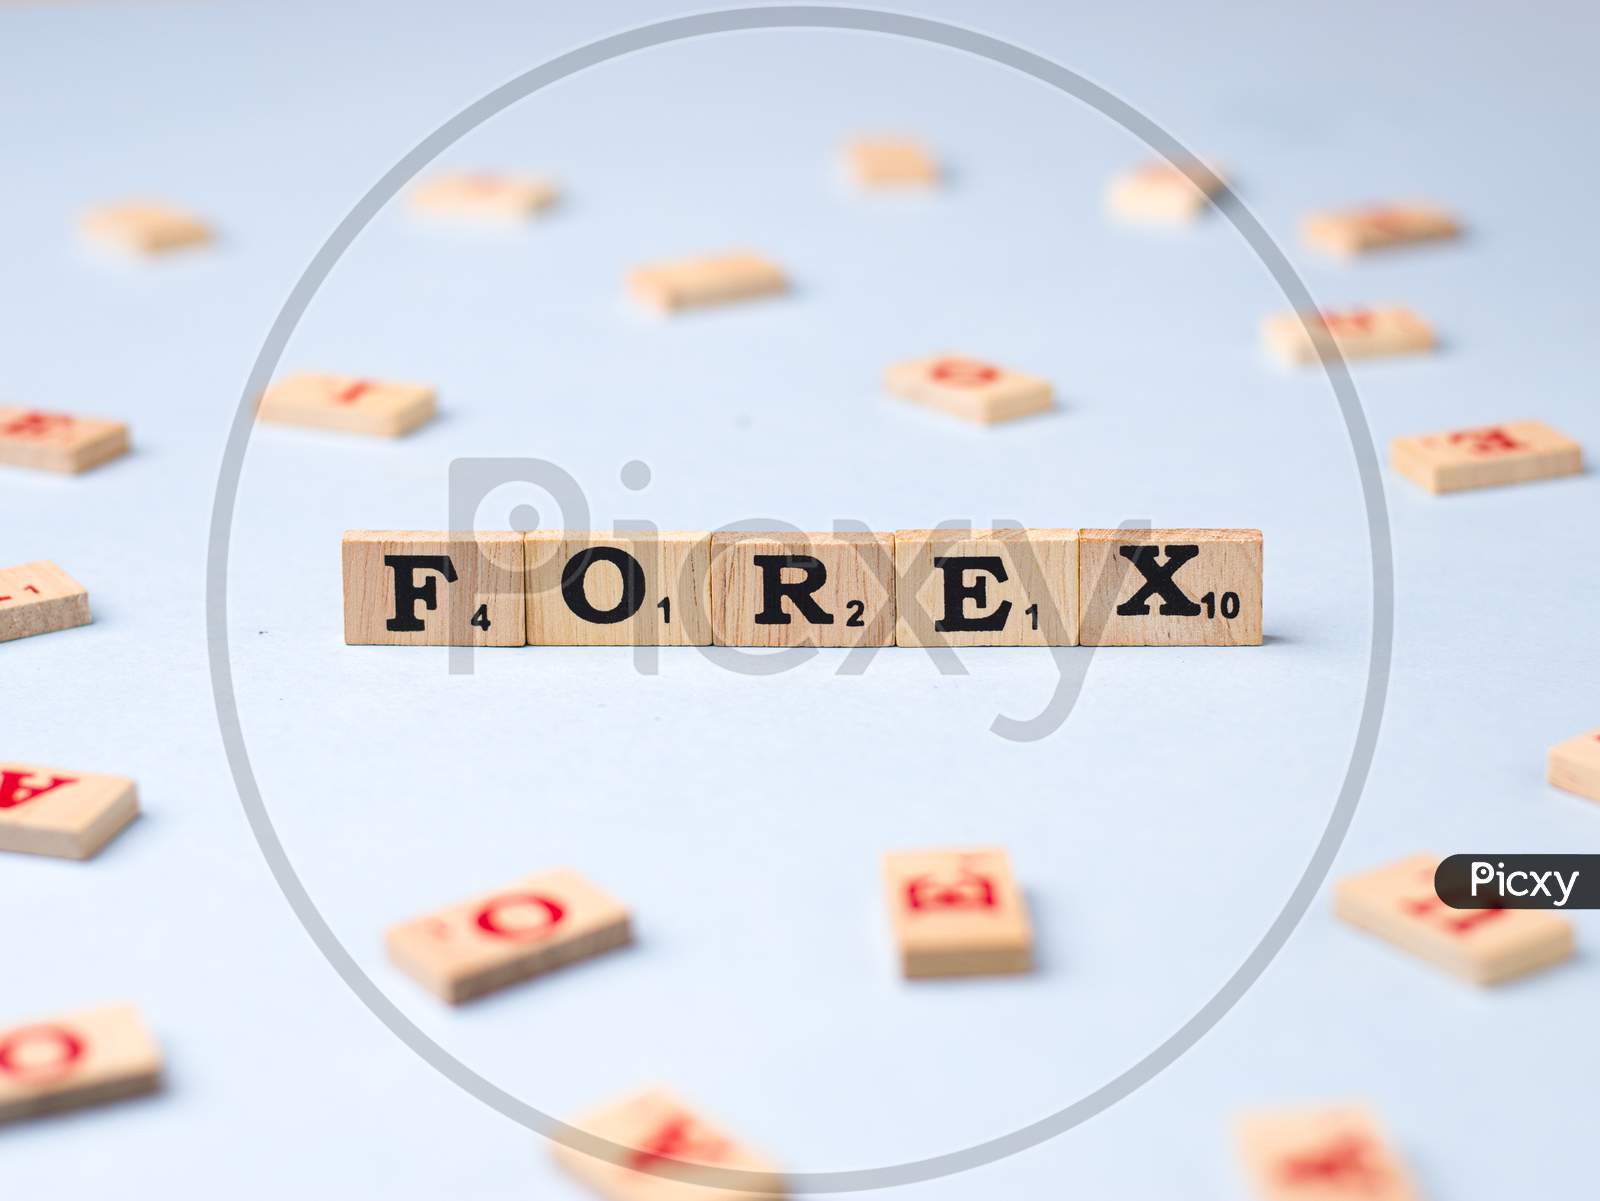 Assam, india - April 19, 2021 : Forex logo on phone screen stock image.